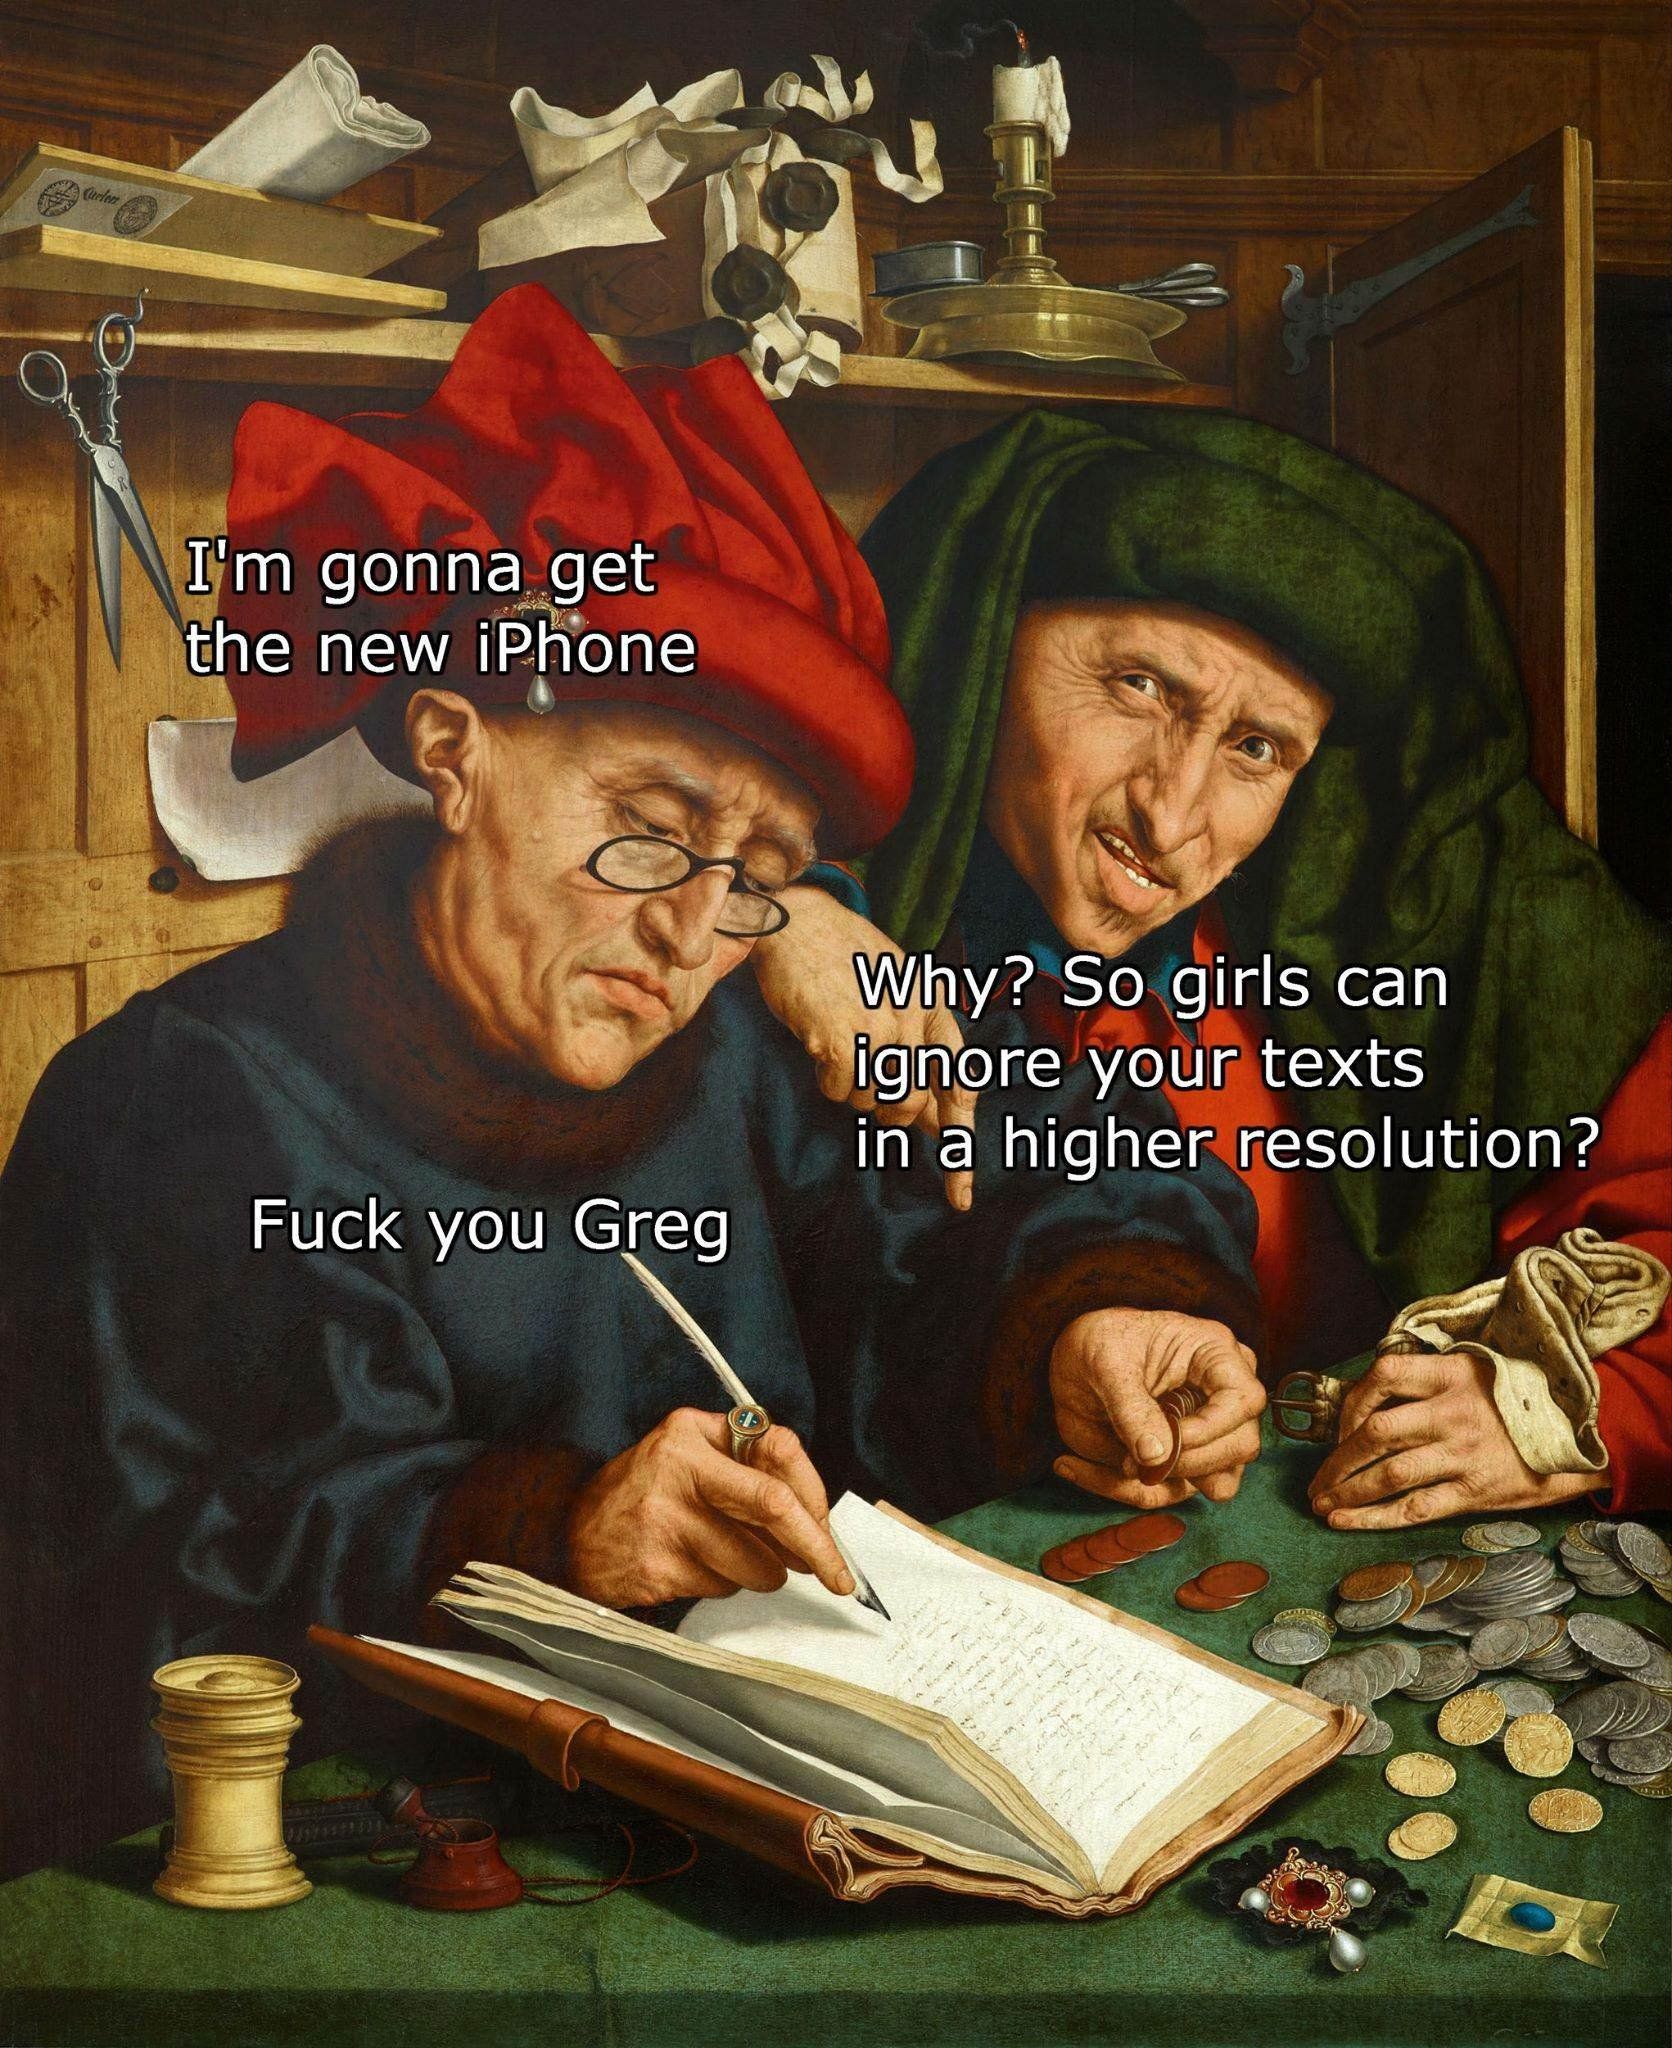 F*uck you Greg!!